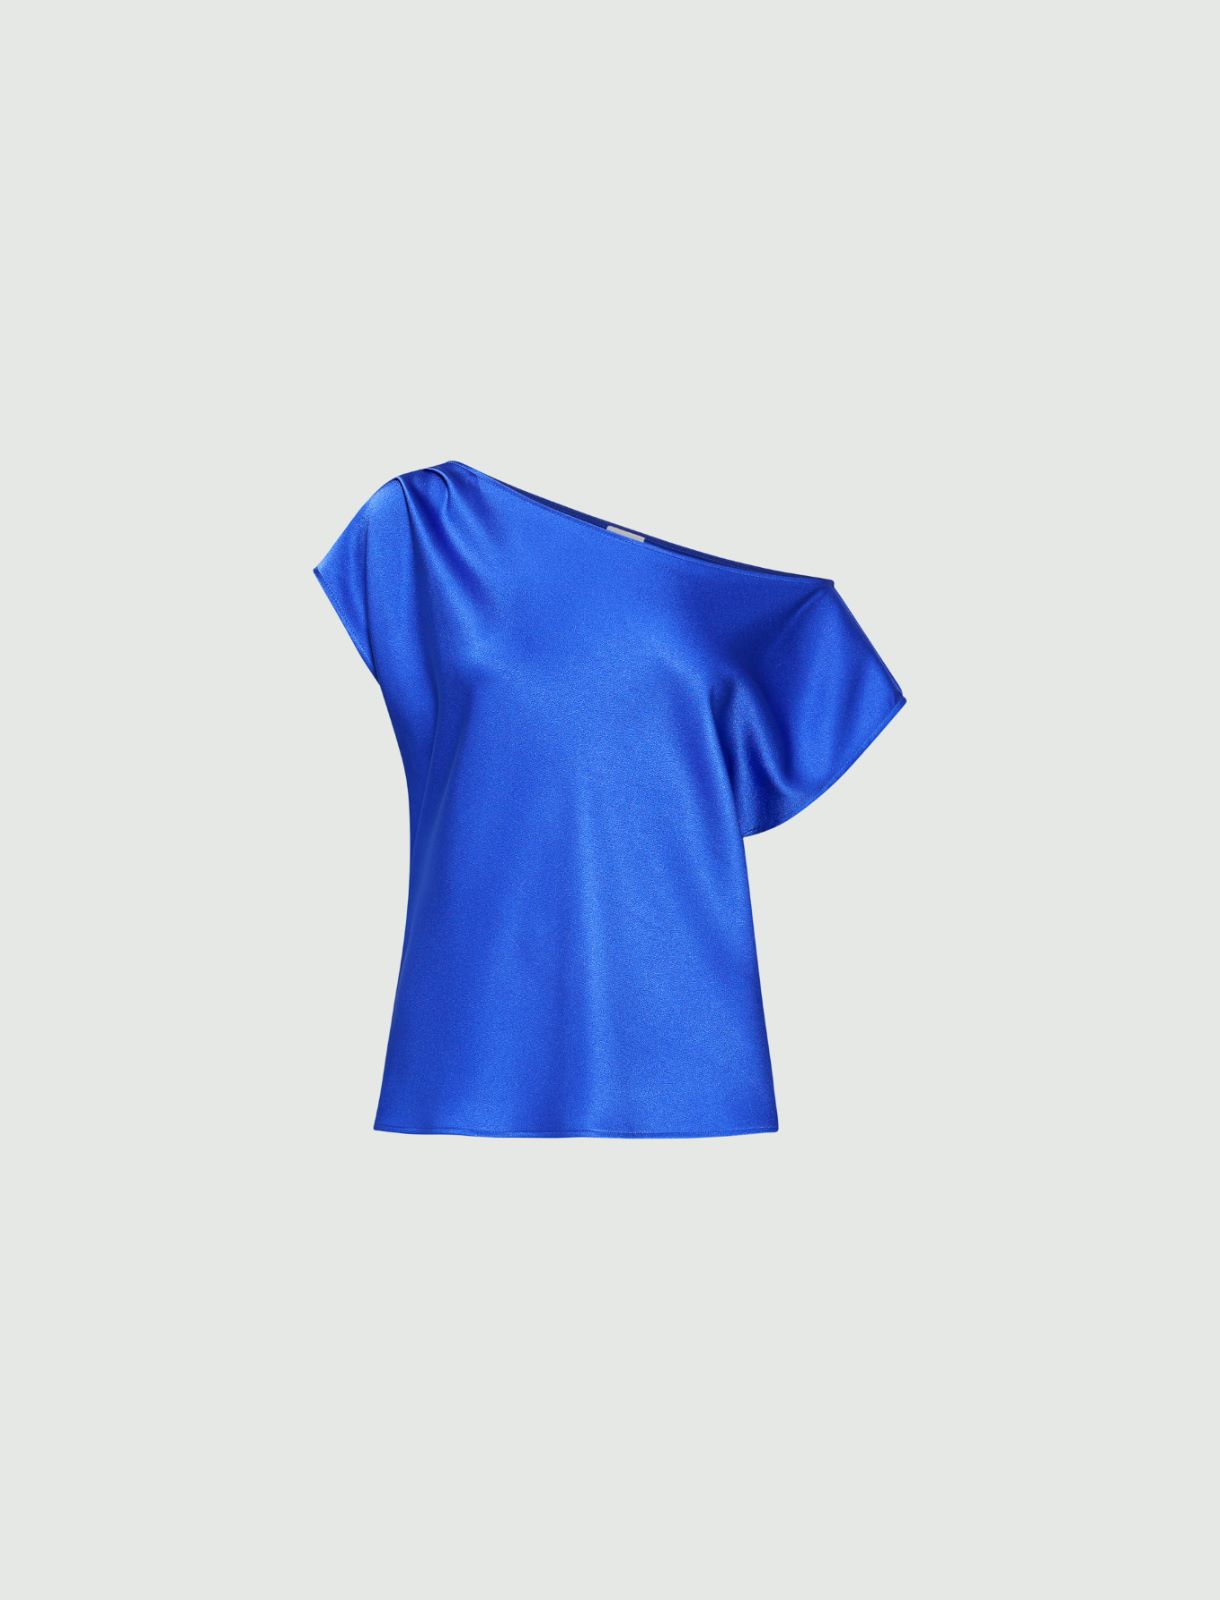 Asymmetrical top, cornflower blue | Marella